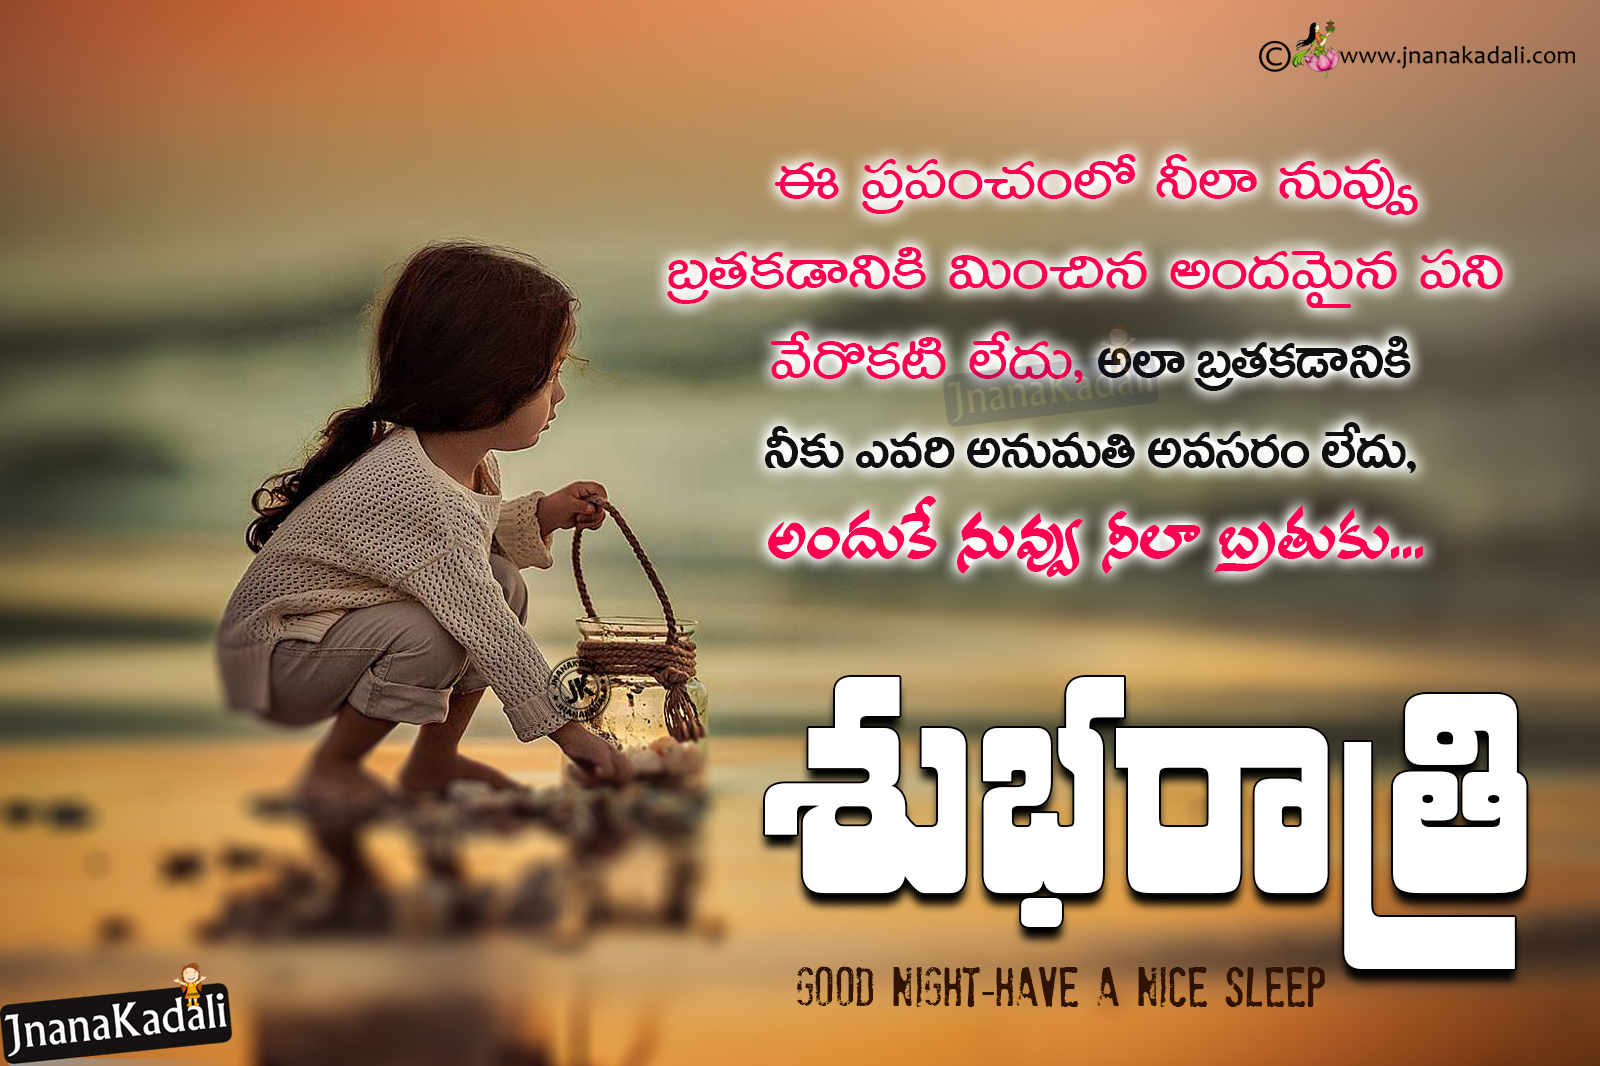 Subharaatri Inspirational Sayings messages in Telugu-Good night ...